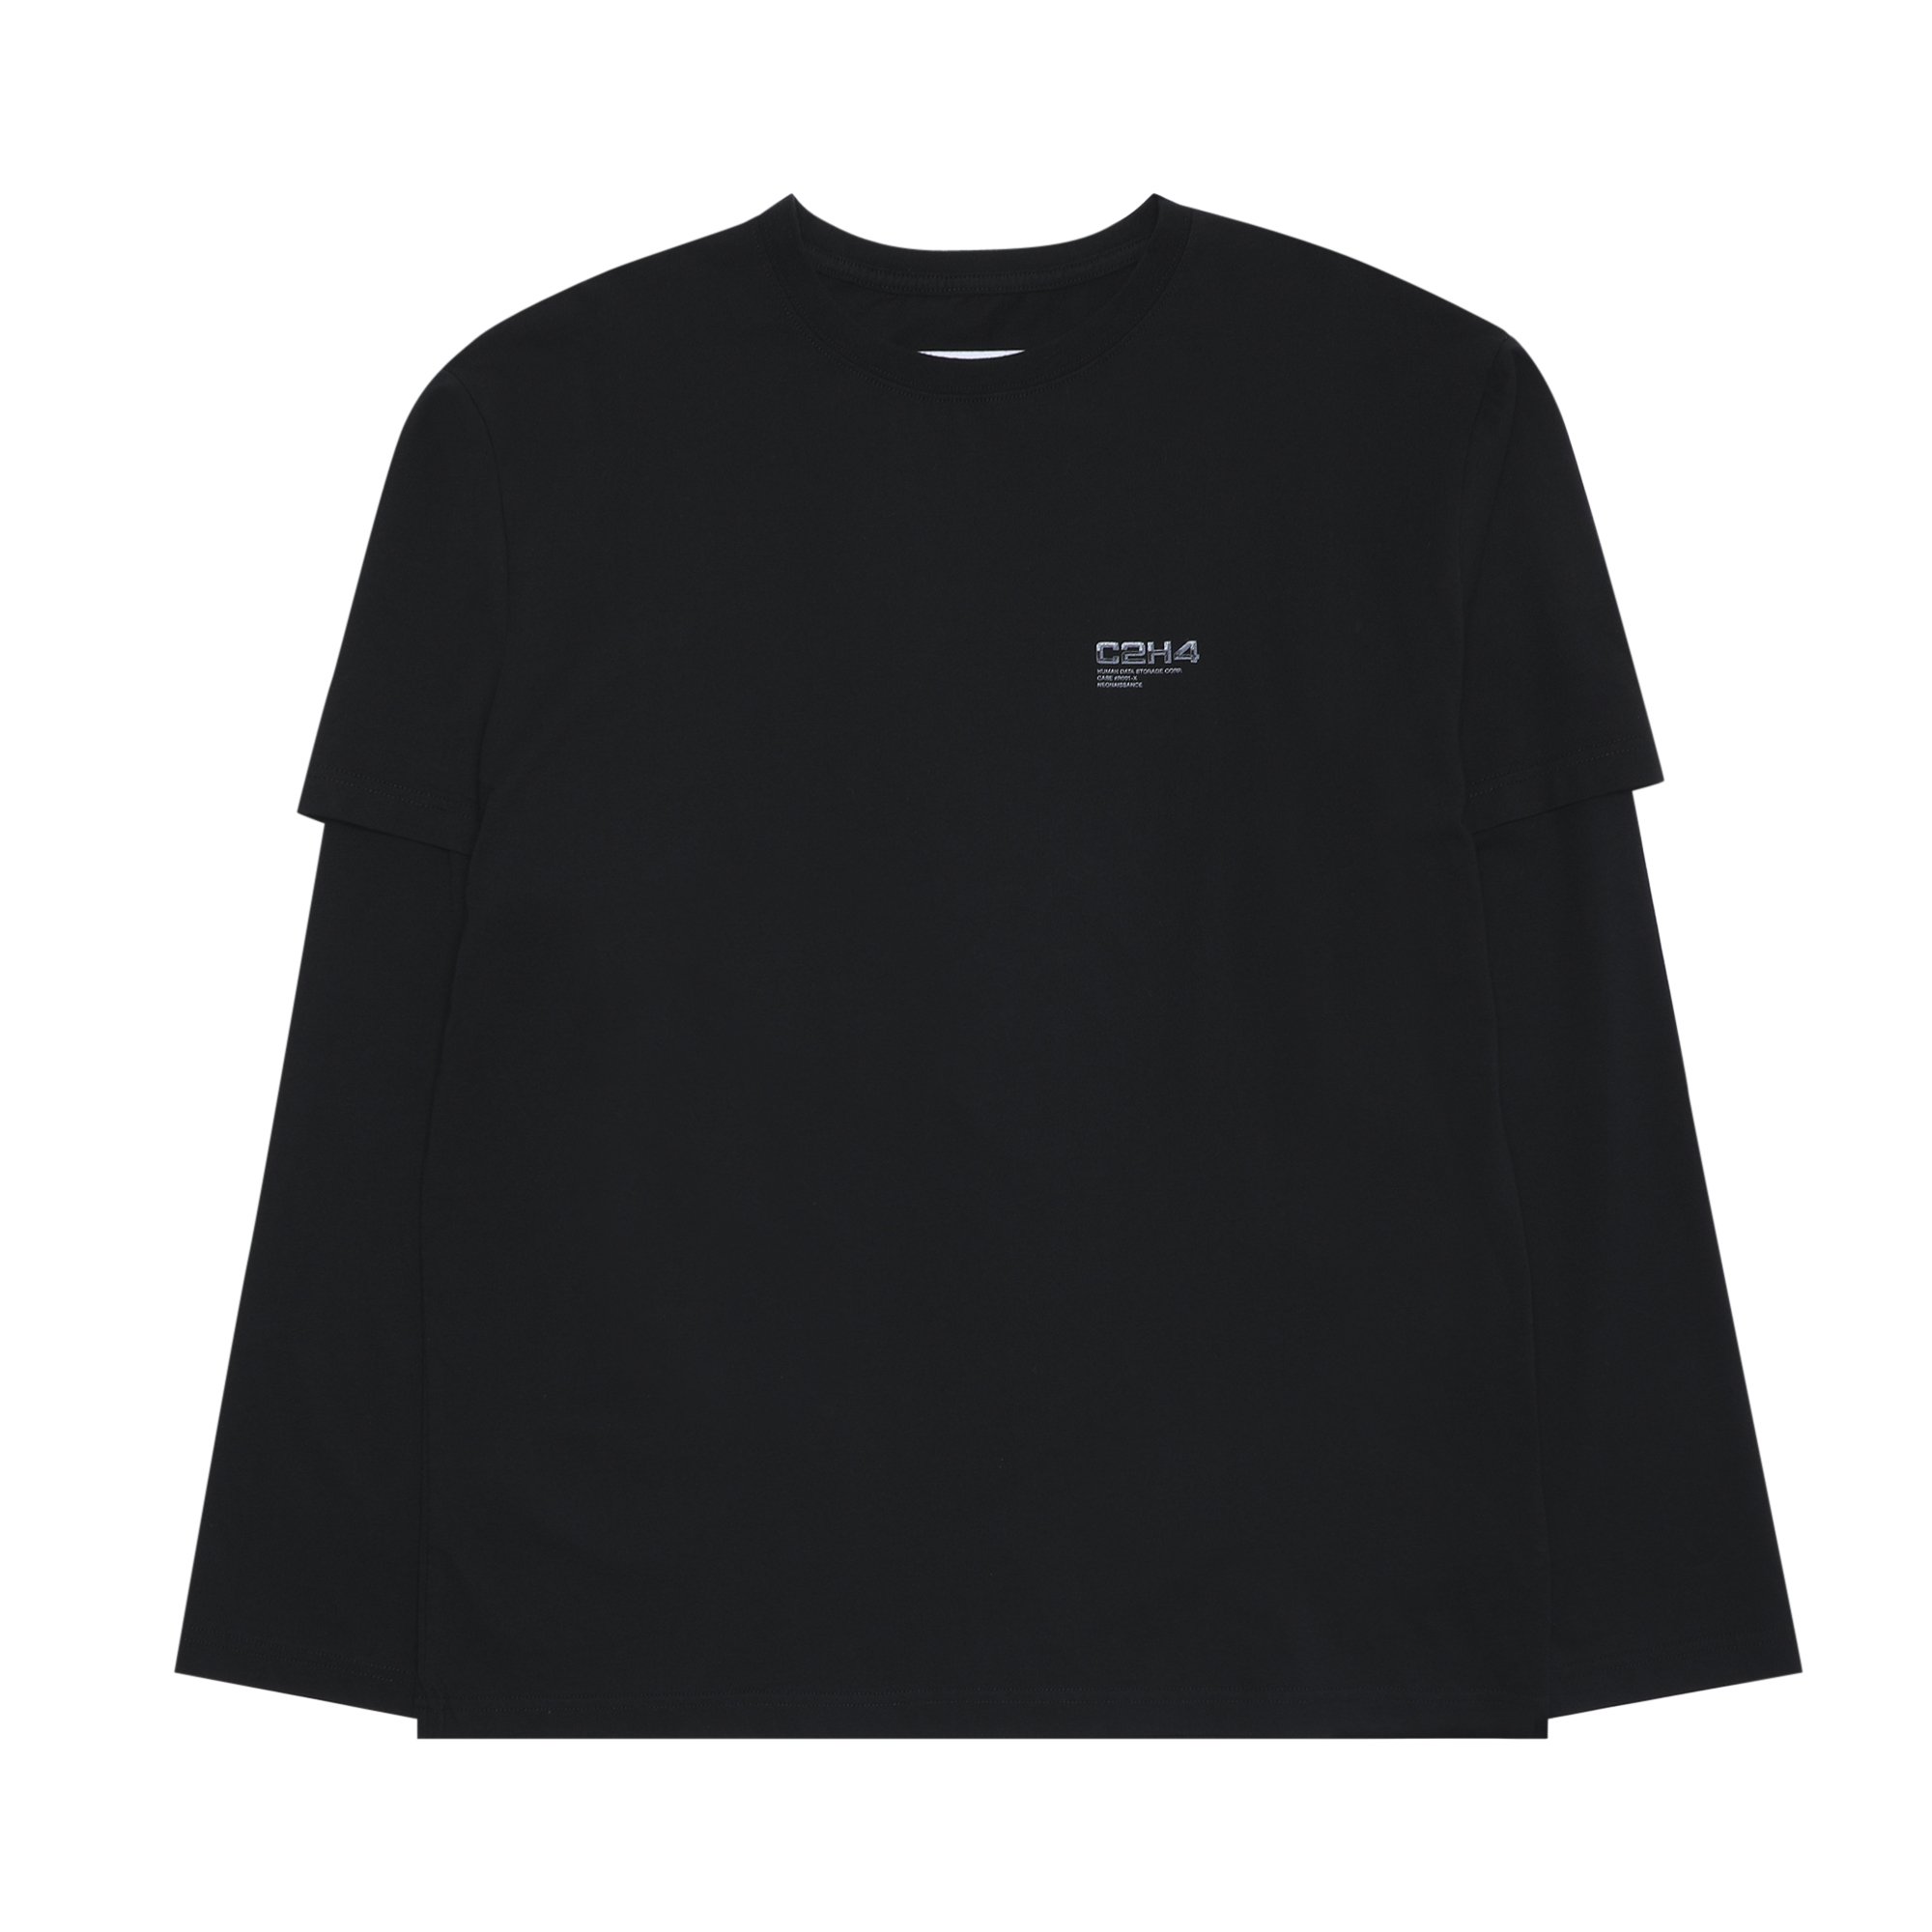 C2H4 Double Layered Long-Sleeve T-shirt 'Black'